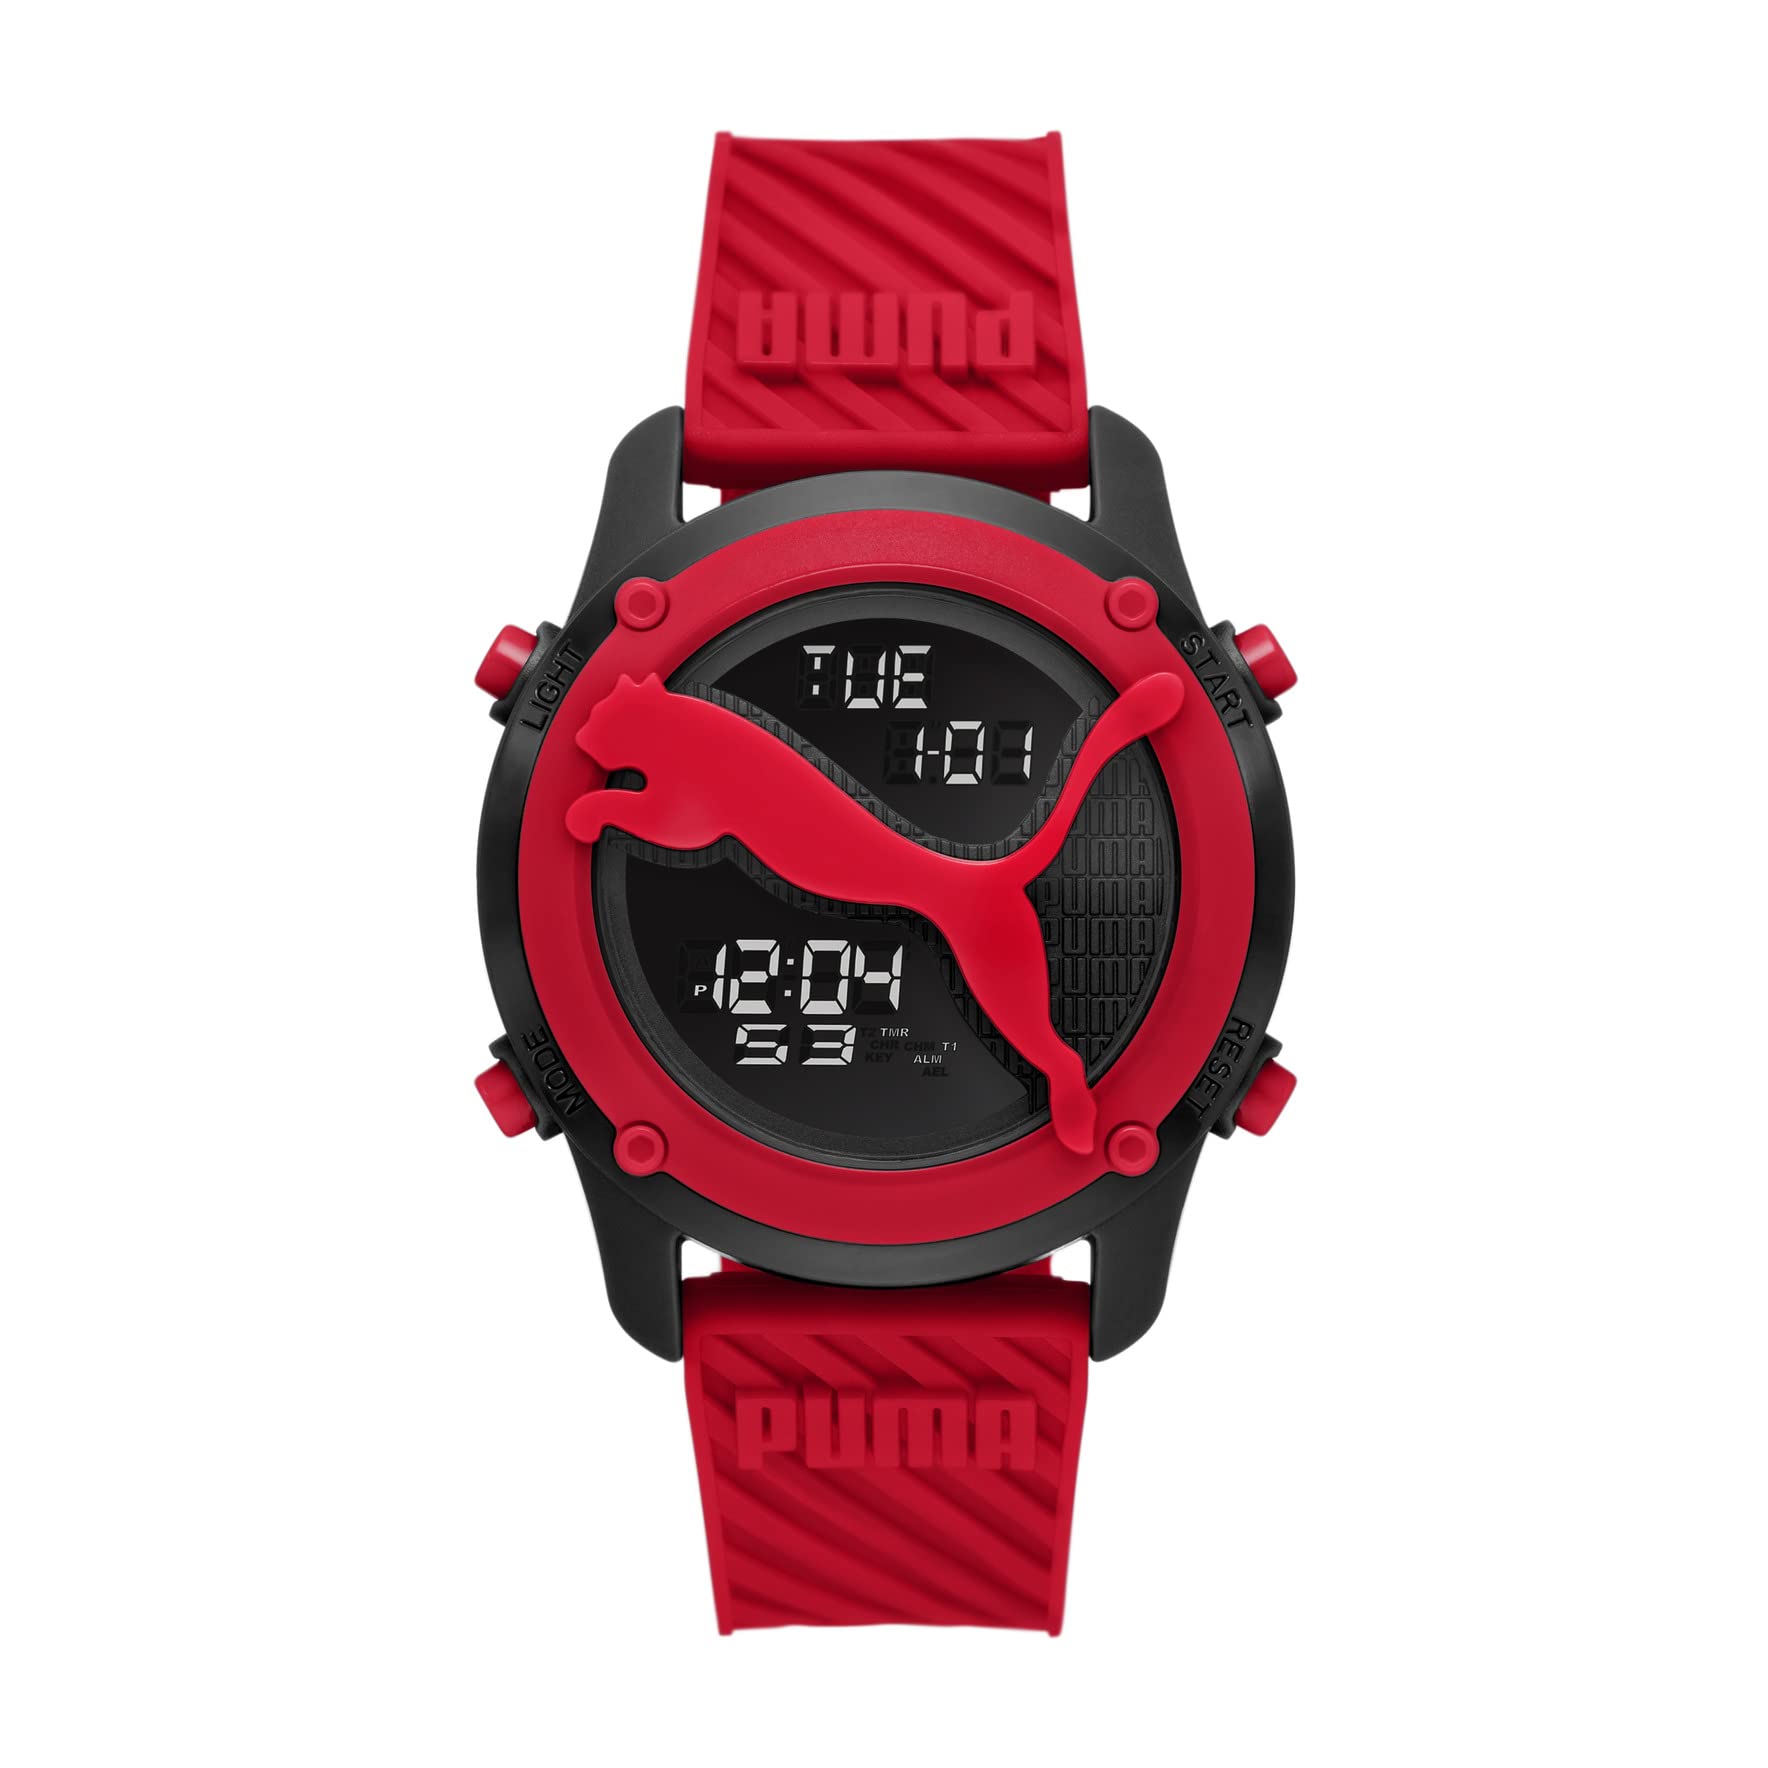 PUMA Men's Big Cat Digital Red Polyurethane Band Watch (Model: P5100)